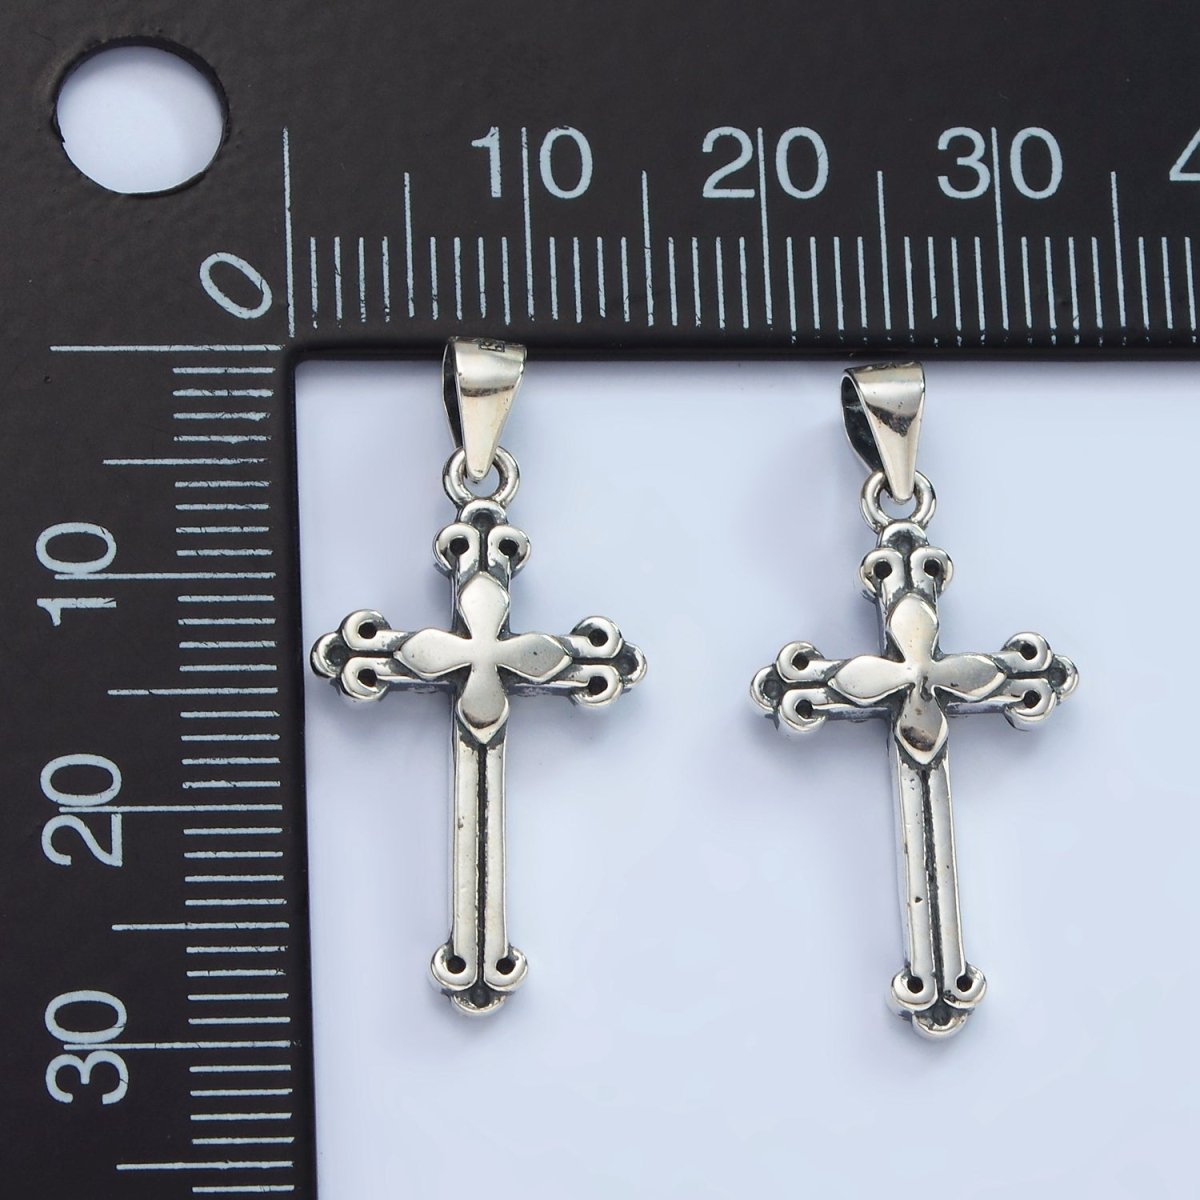 S925 Sterling Silver 30mm Fleur Passion Cross Oxidized Pendant | SL-460 - DLUXCA